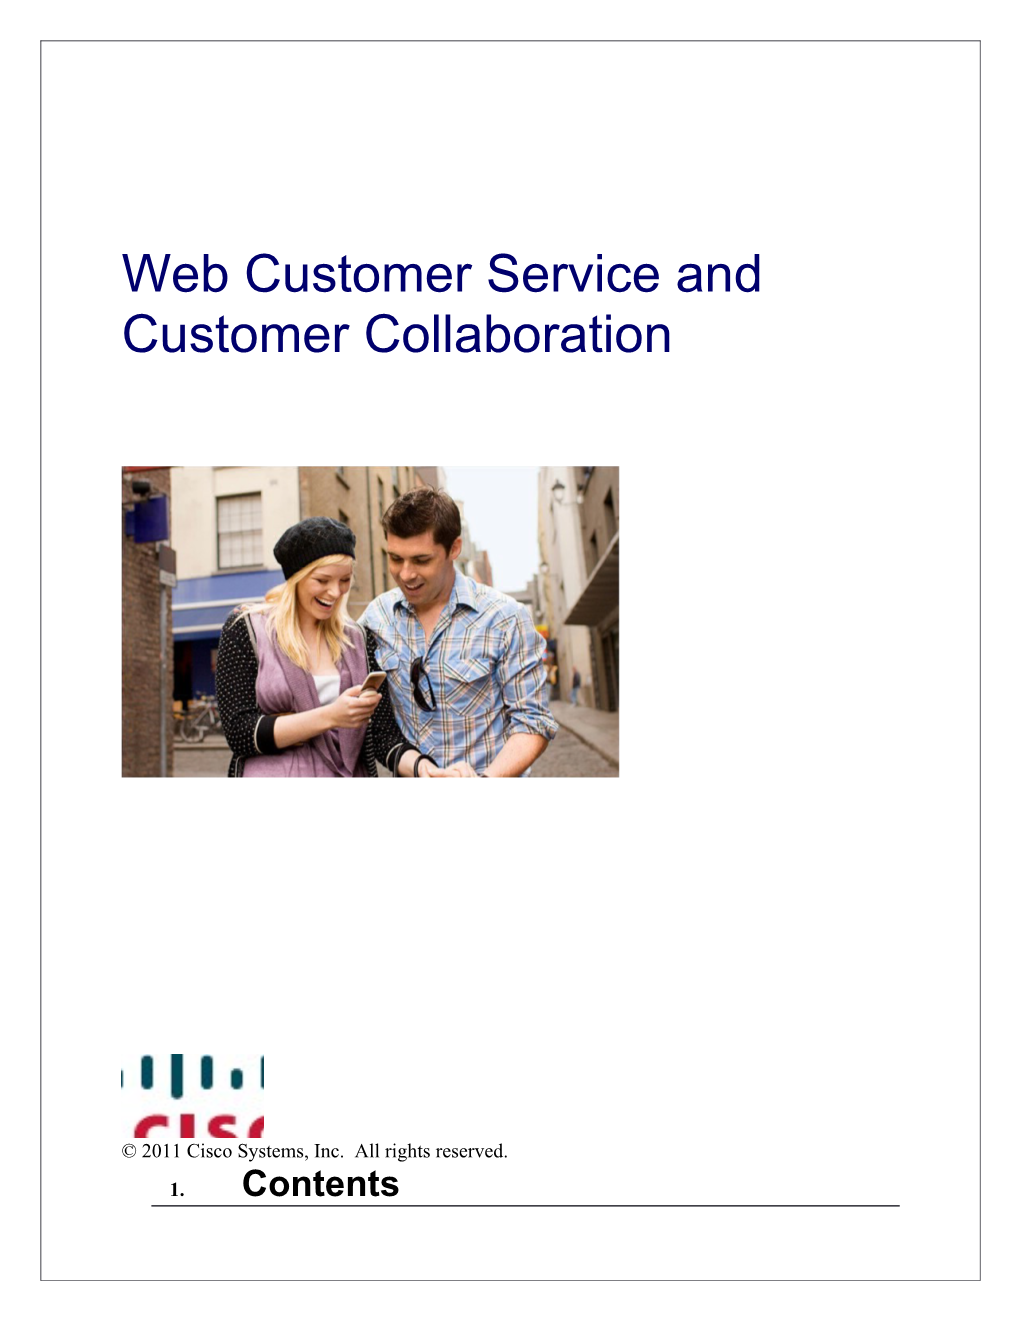 Web Customer Service and Customer Collaboration